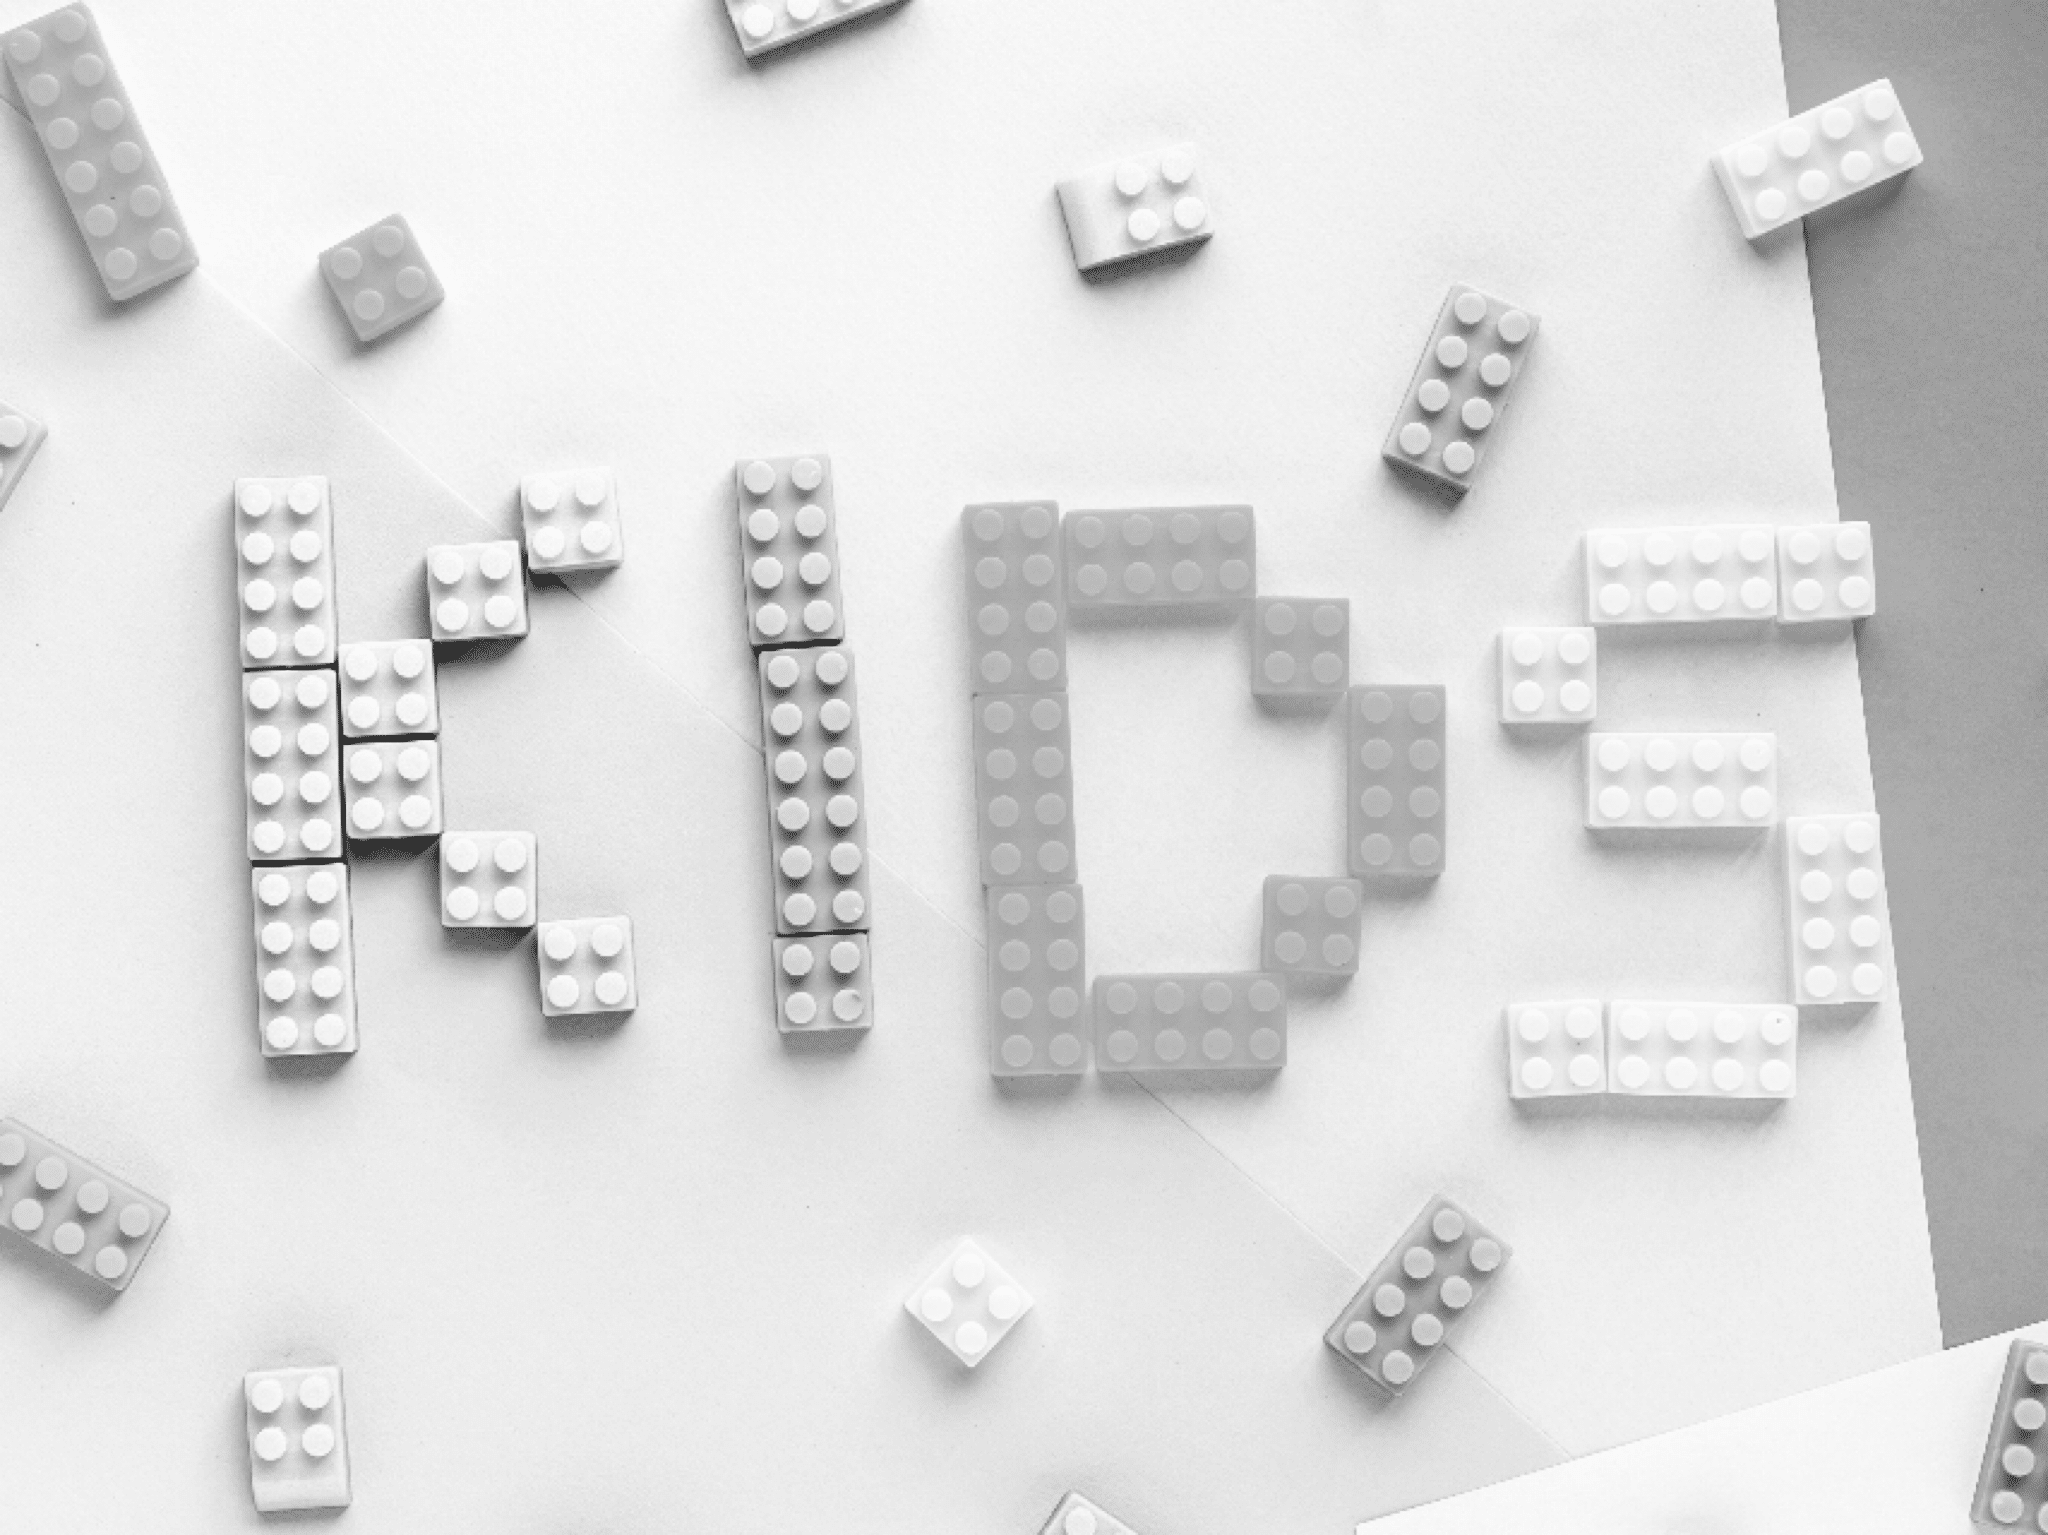 KIDS spelled in lego blocks